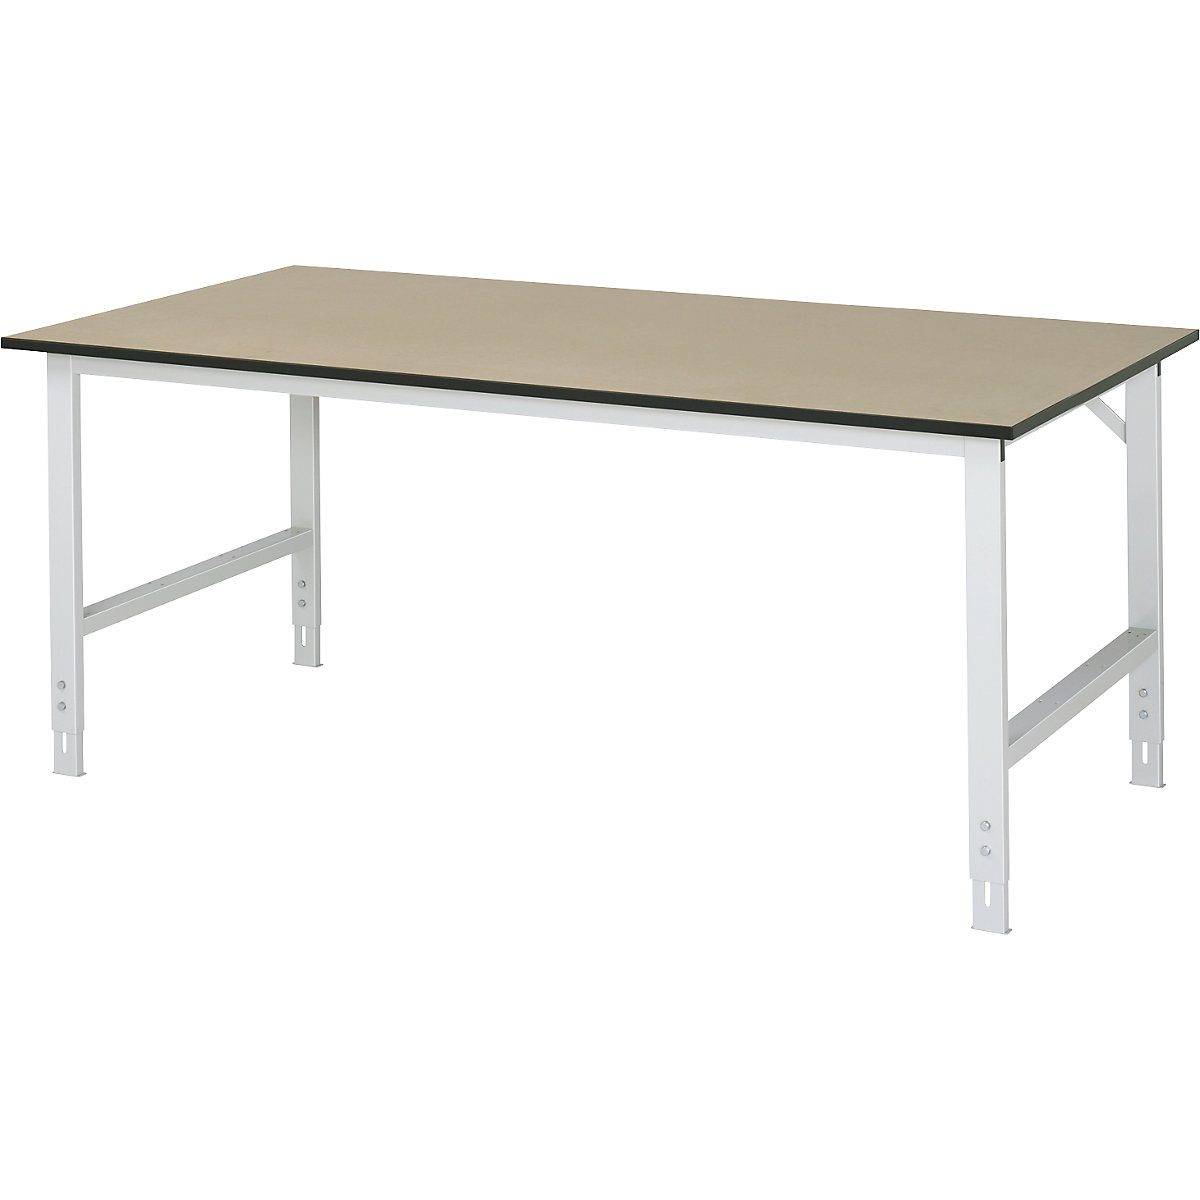 Delovna miza, nastavljiva po višini – RAU, 760 – 1080 mm, MDF plošča, ŠxG 2000 x 1000 mm, svetlo siva-11